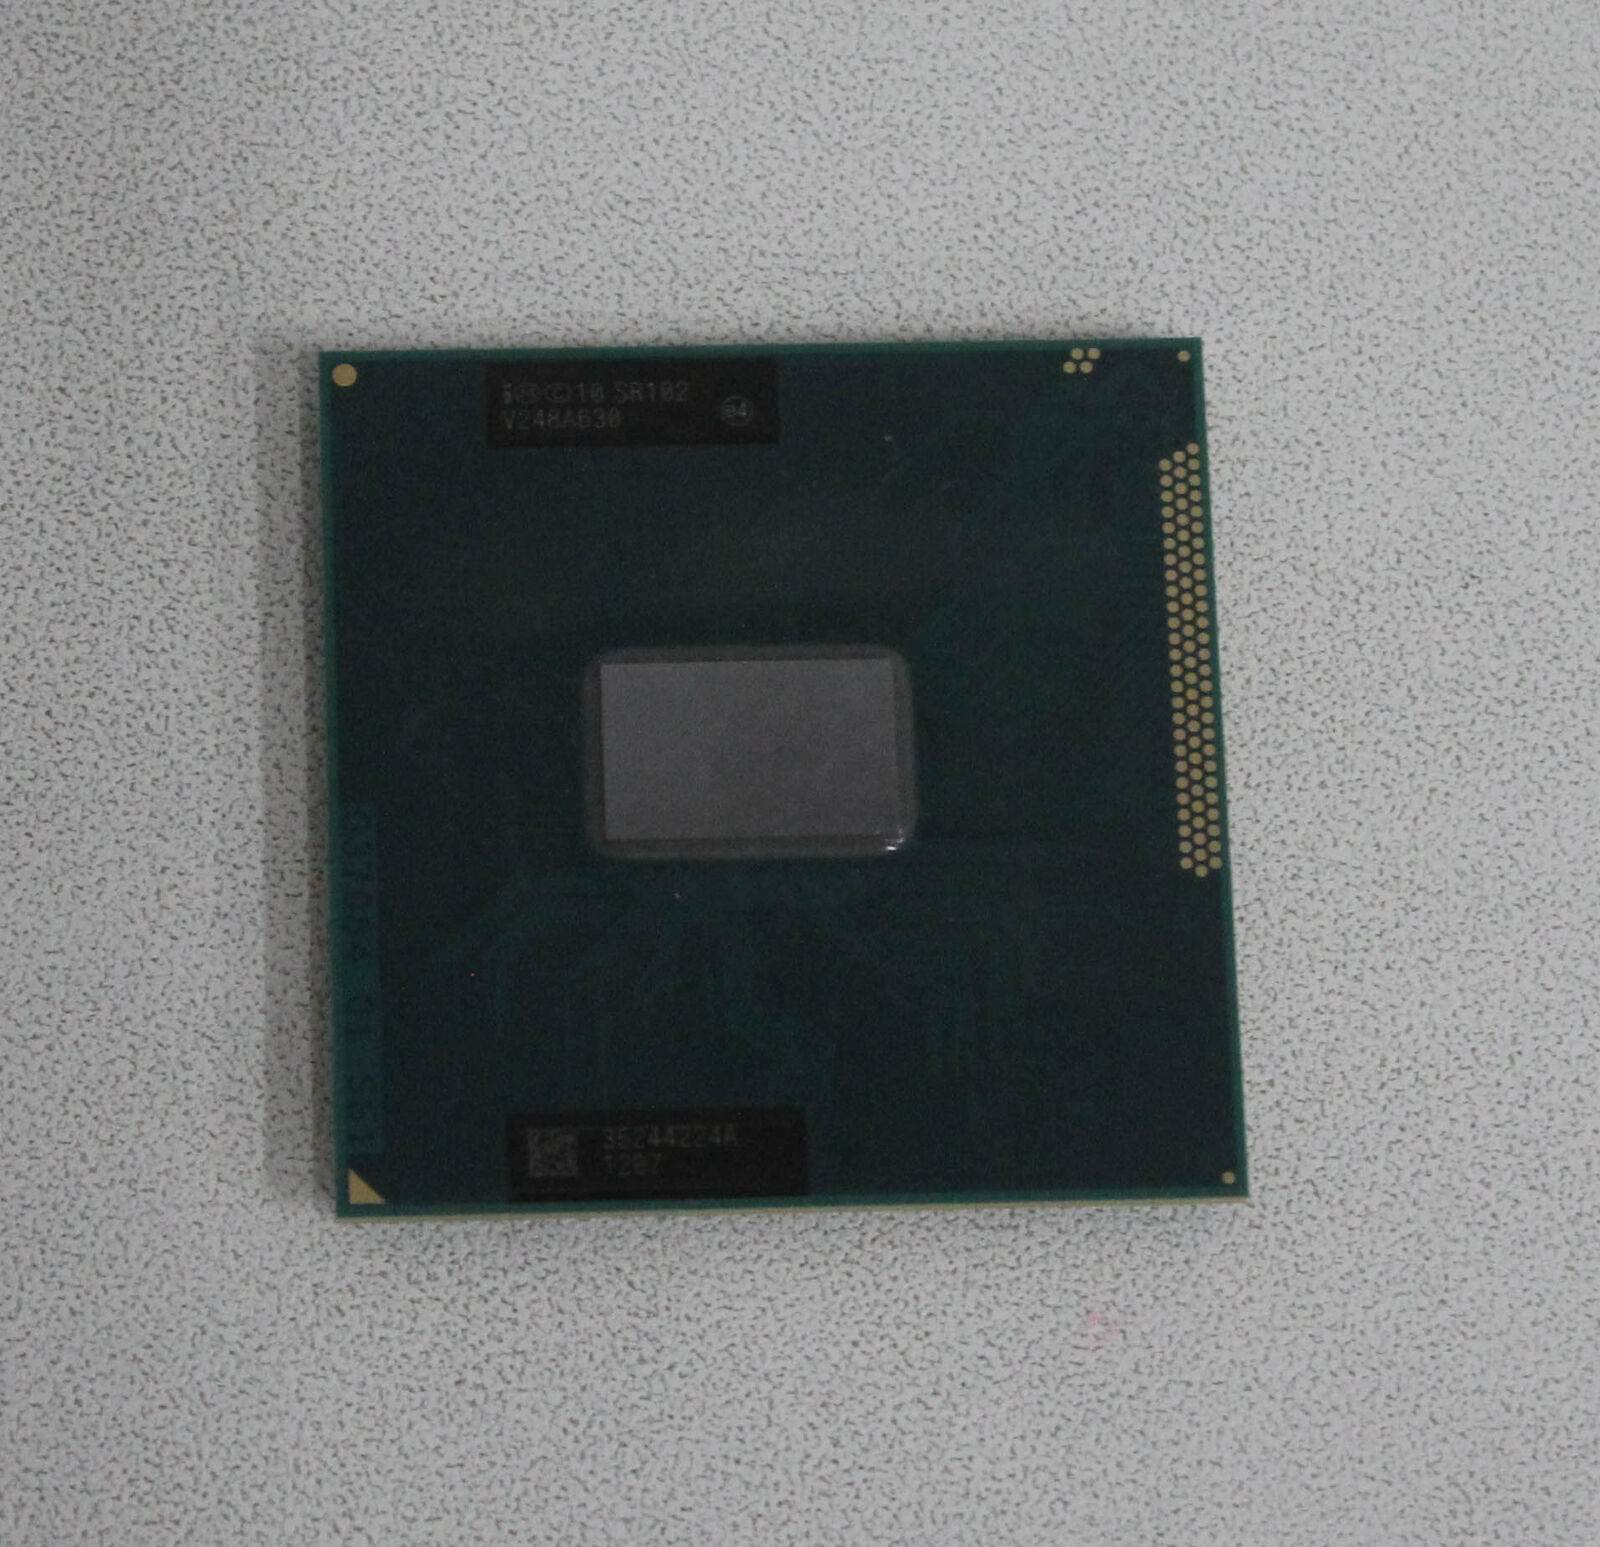 Flipper schrijven kogel SR102 Intel Celeron 1000M 1.8 Ghz CPU G2 2Mb Dual Core Processor "GRADE A"  | eBay